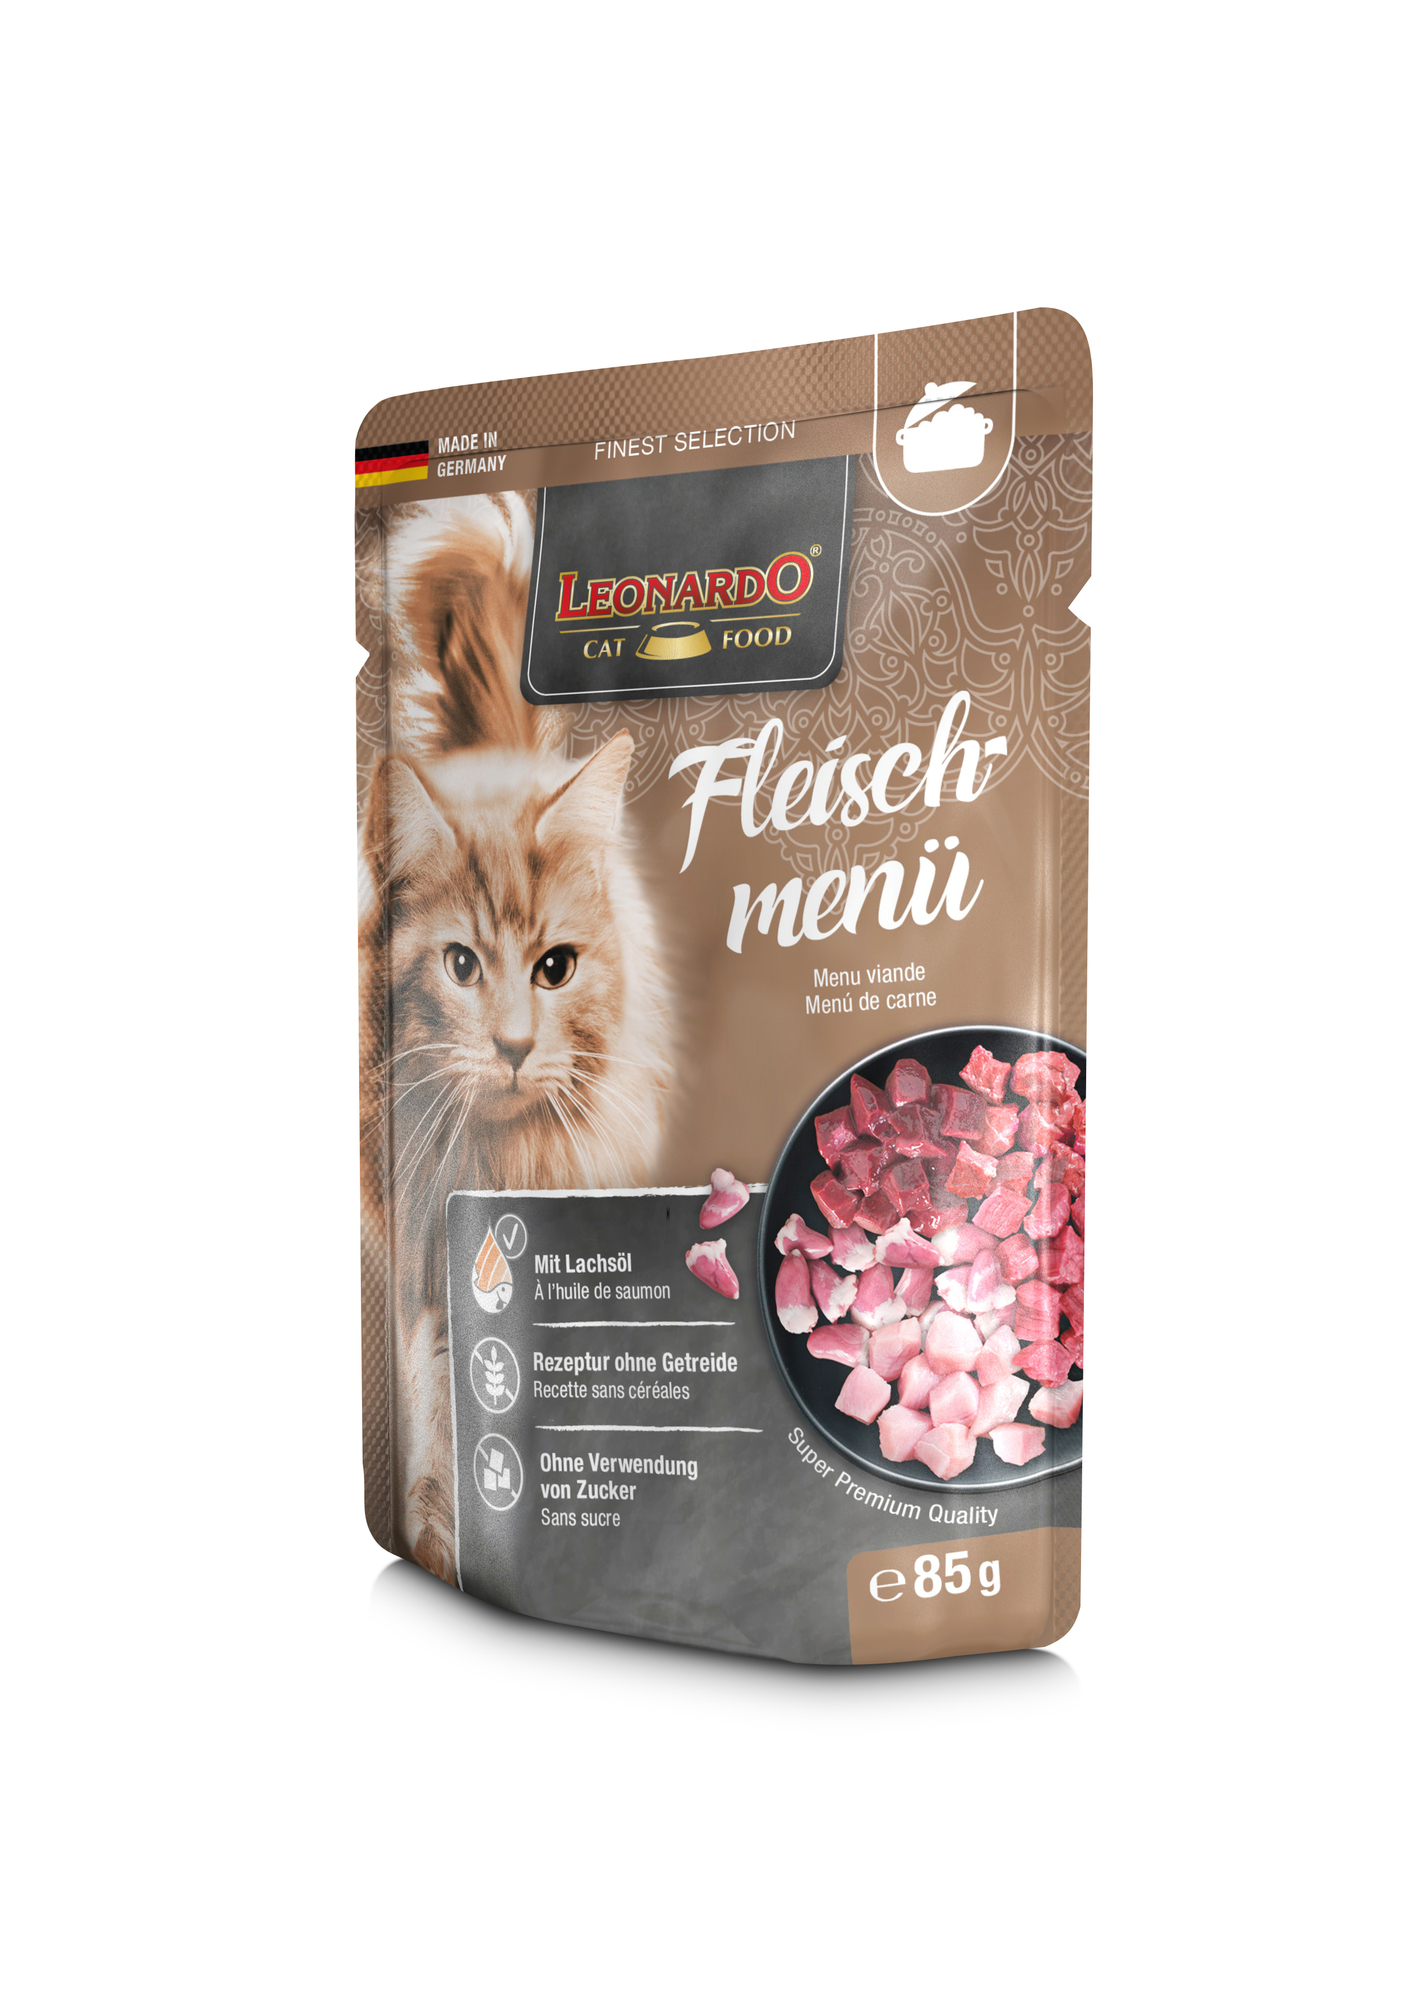 Leonardo Finest Selection alimento húmedo para gatos - 3 recetas para escoger